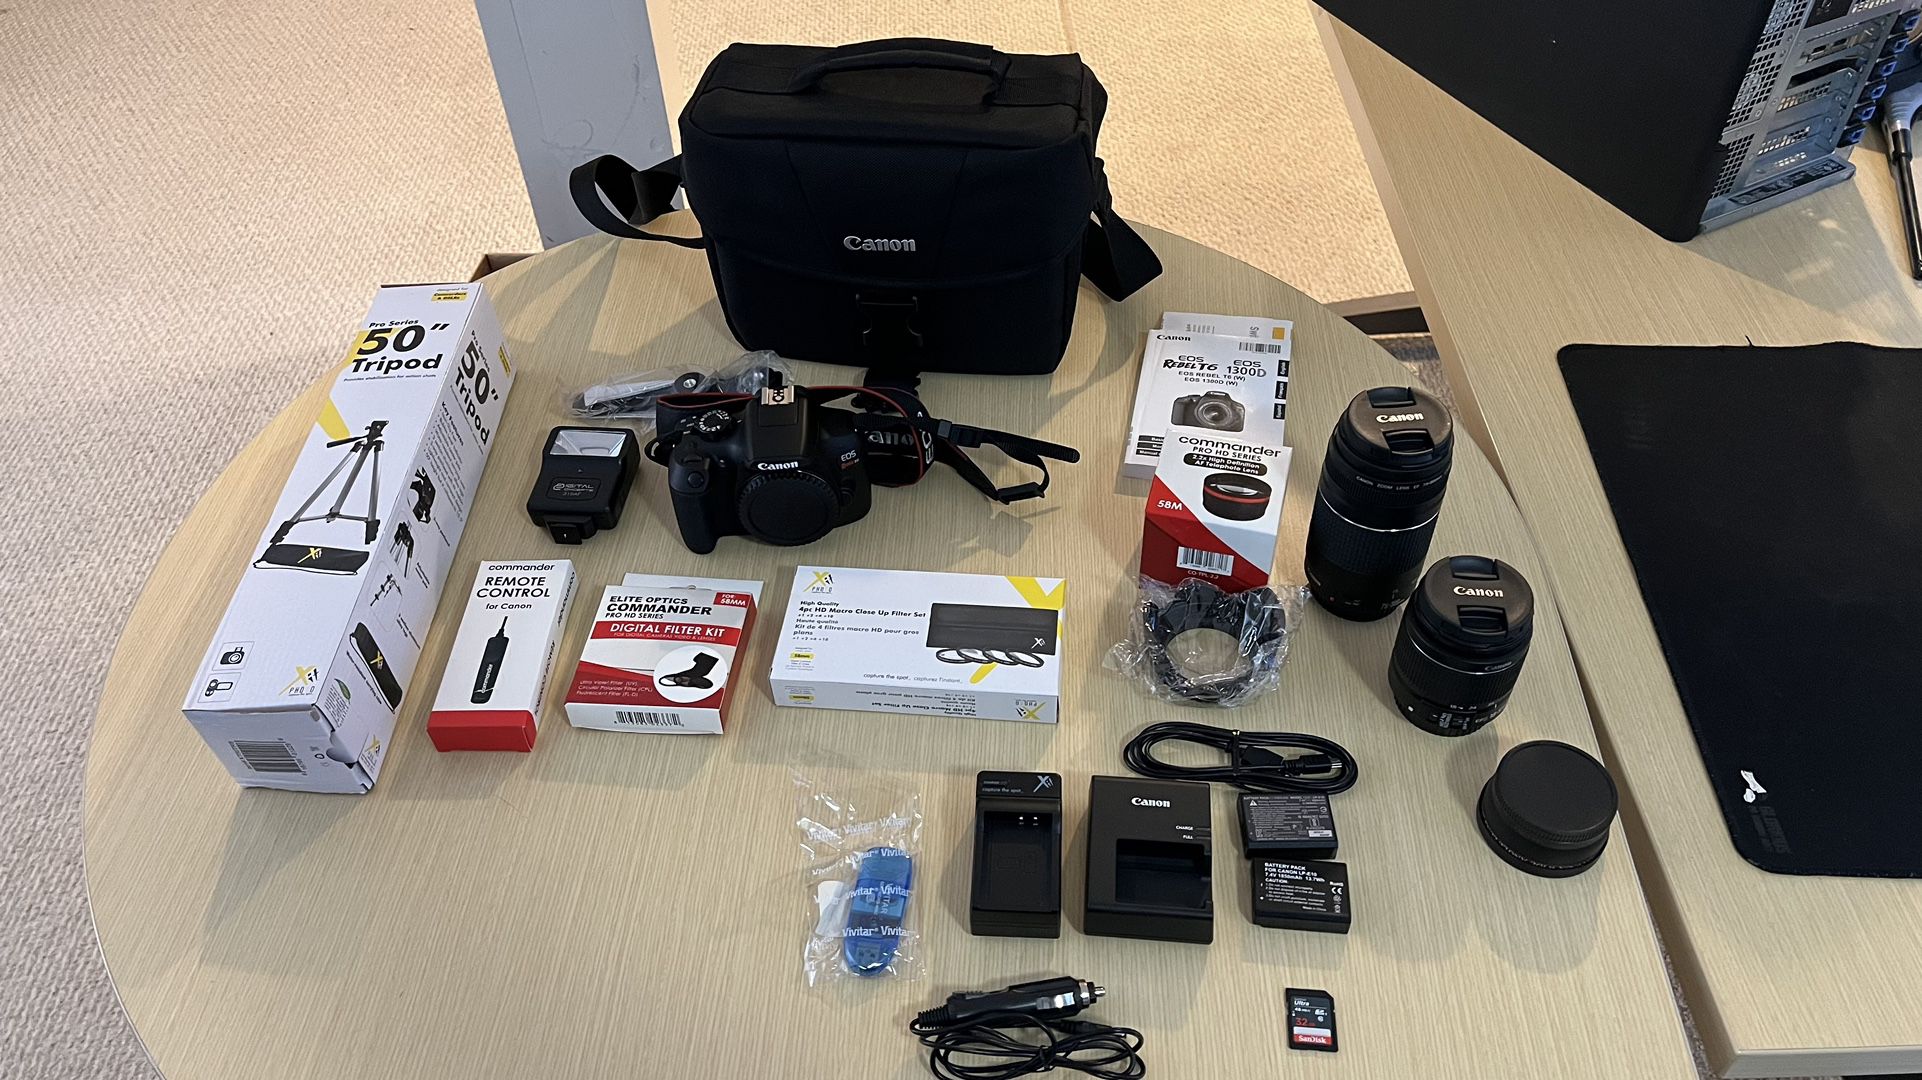 Canon EOS Rebel T6 1300D Digital SLR Camera Kit